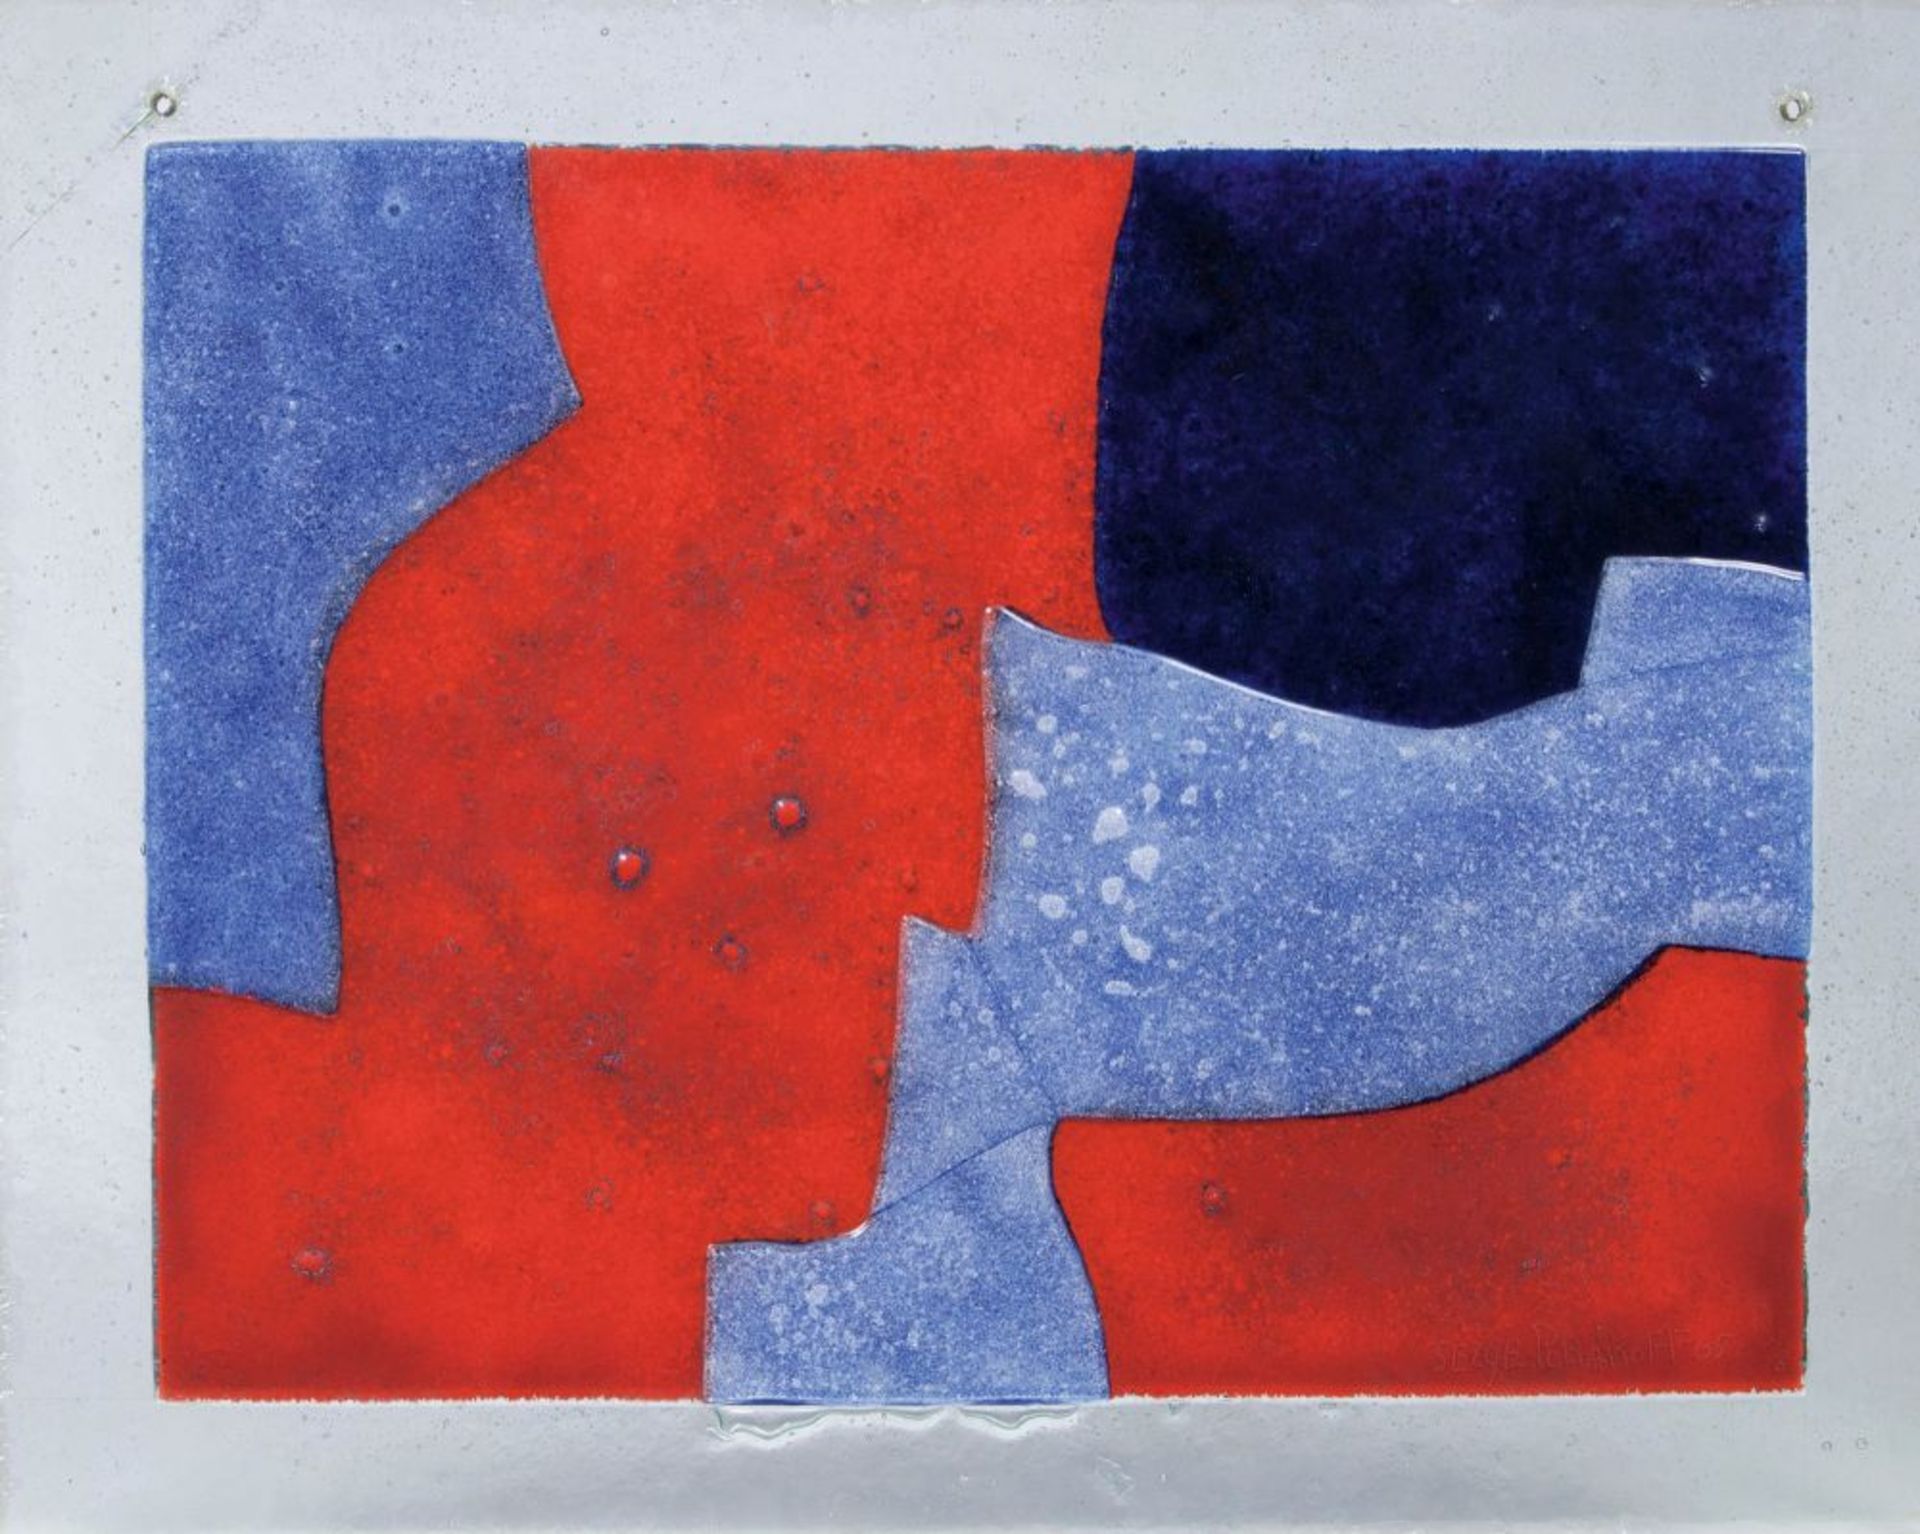 Serge Poliakoff (Moskau 1900 - Paris 1969). Glas-Tableau 'Komposition in Blau, Rot und Schwarz'.